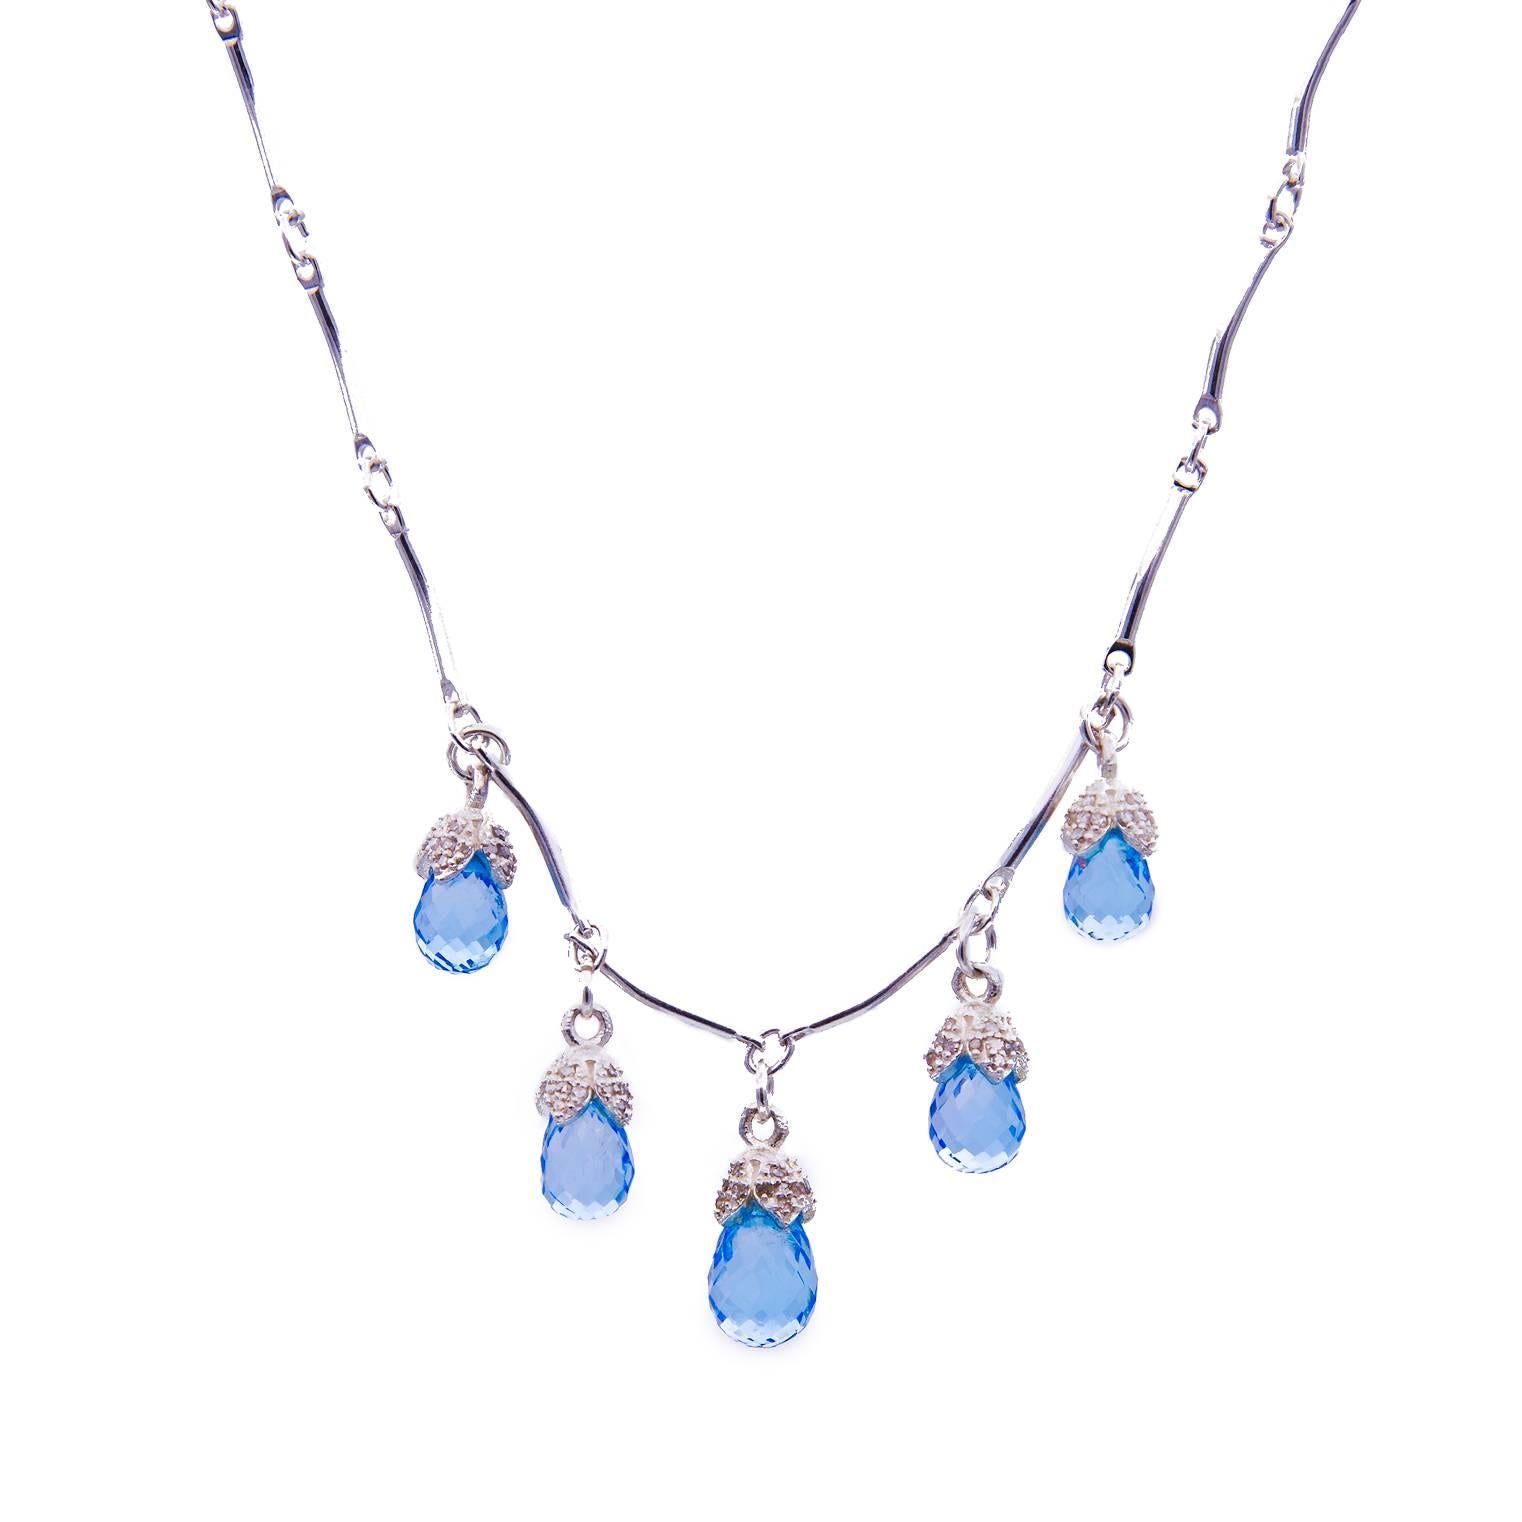 Blue Topaz and Diamond 'Droplets' Necklace